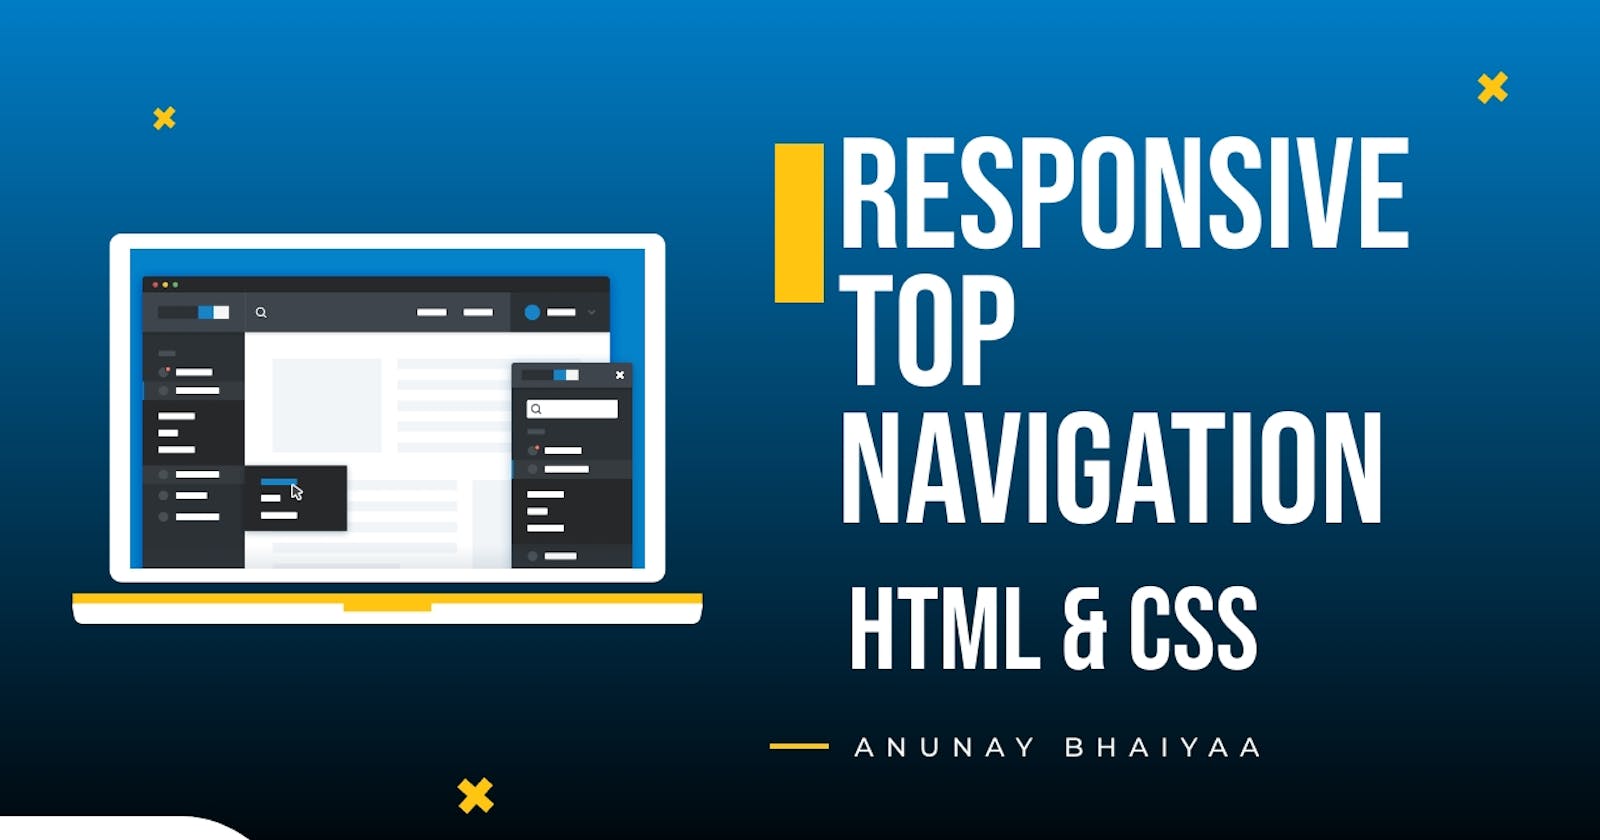 How To Create An Responsive Navigation Bar Using HTML & CSS